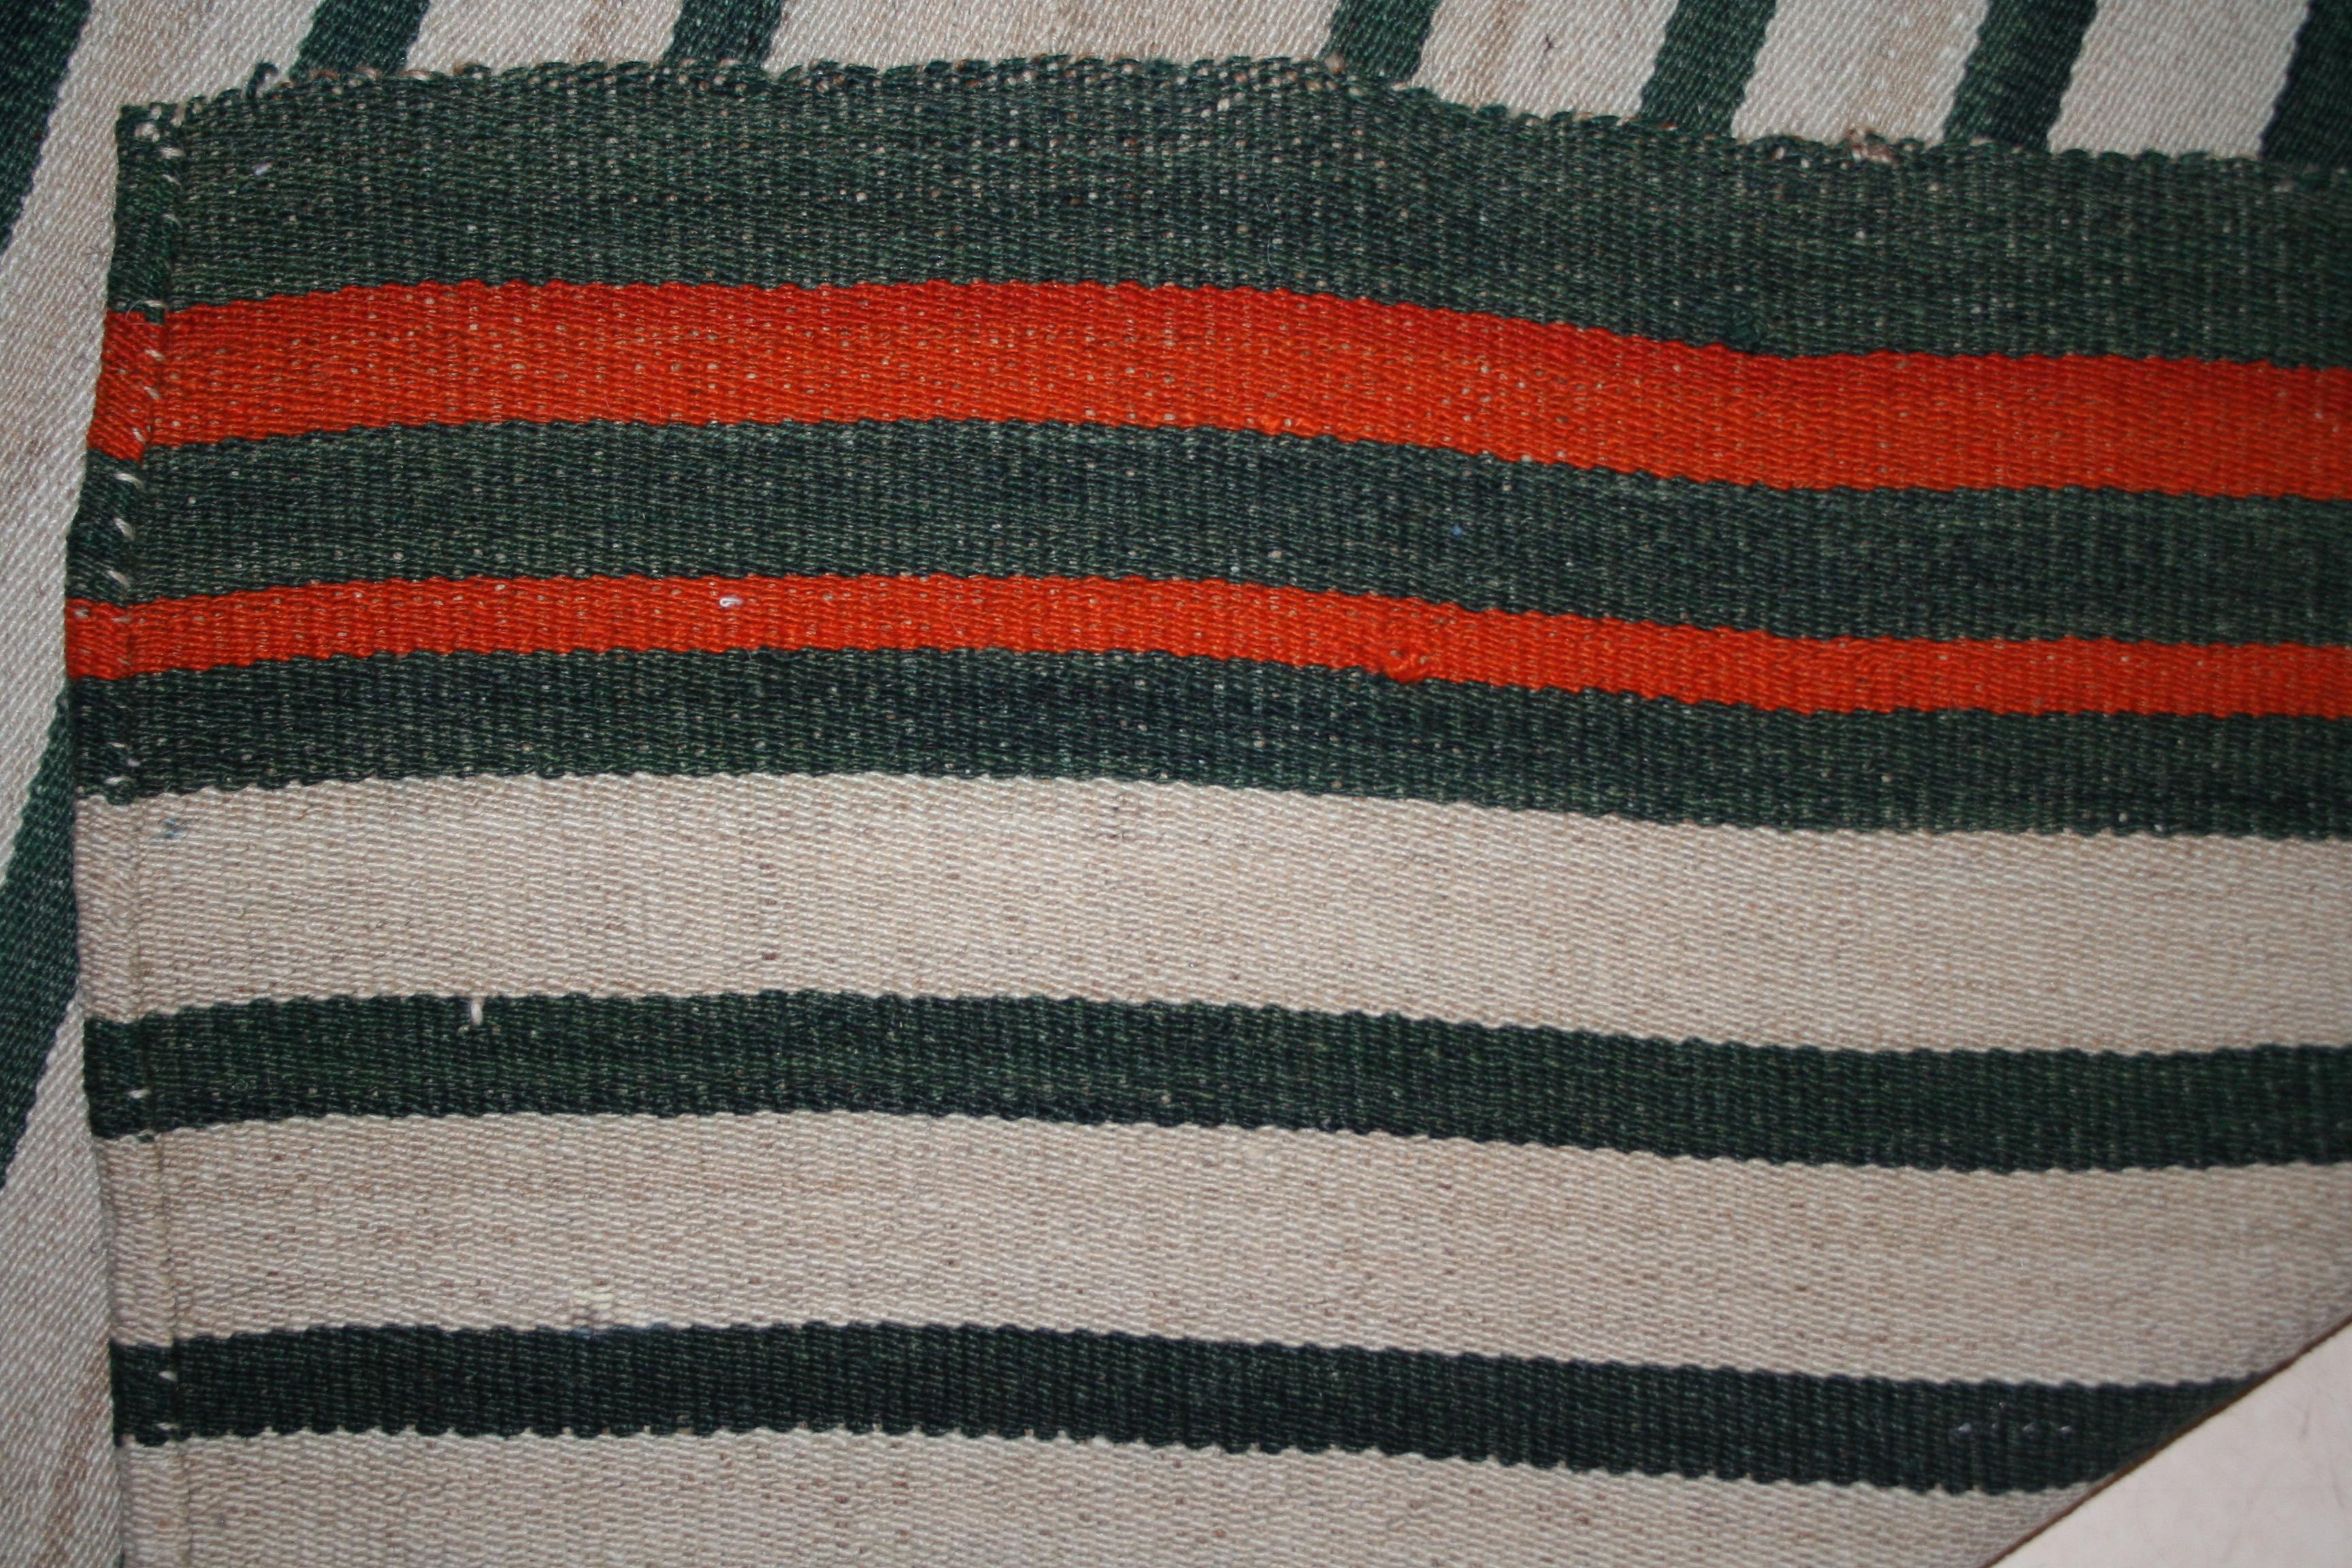 flat-woven rugs